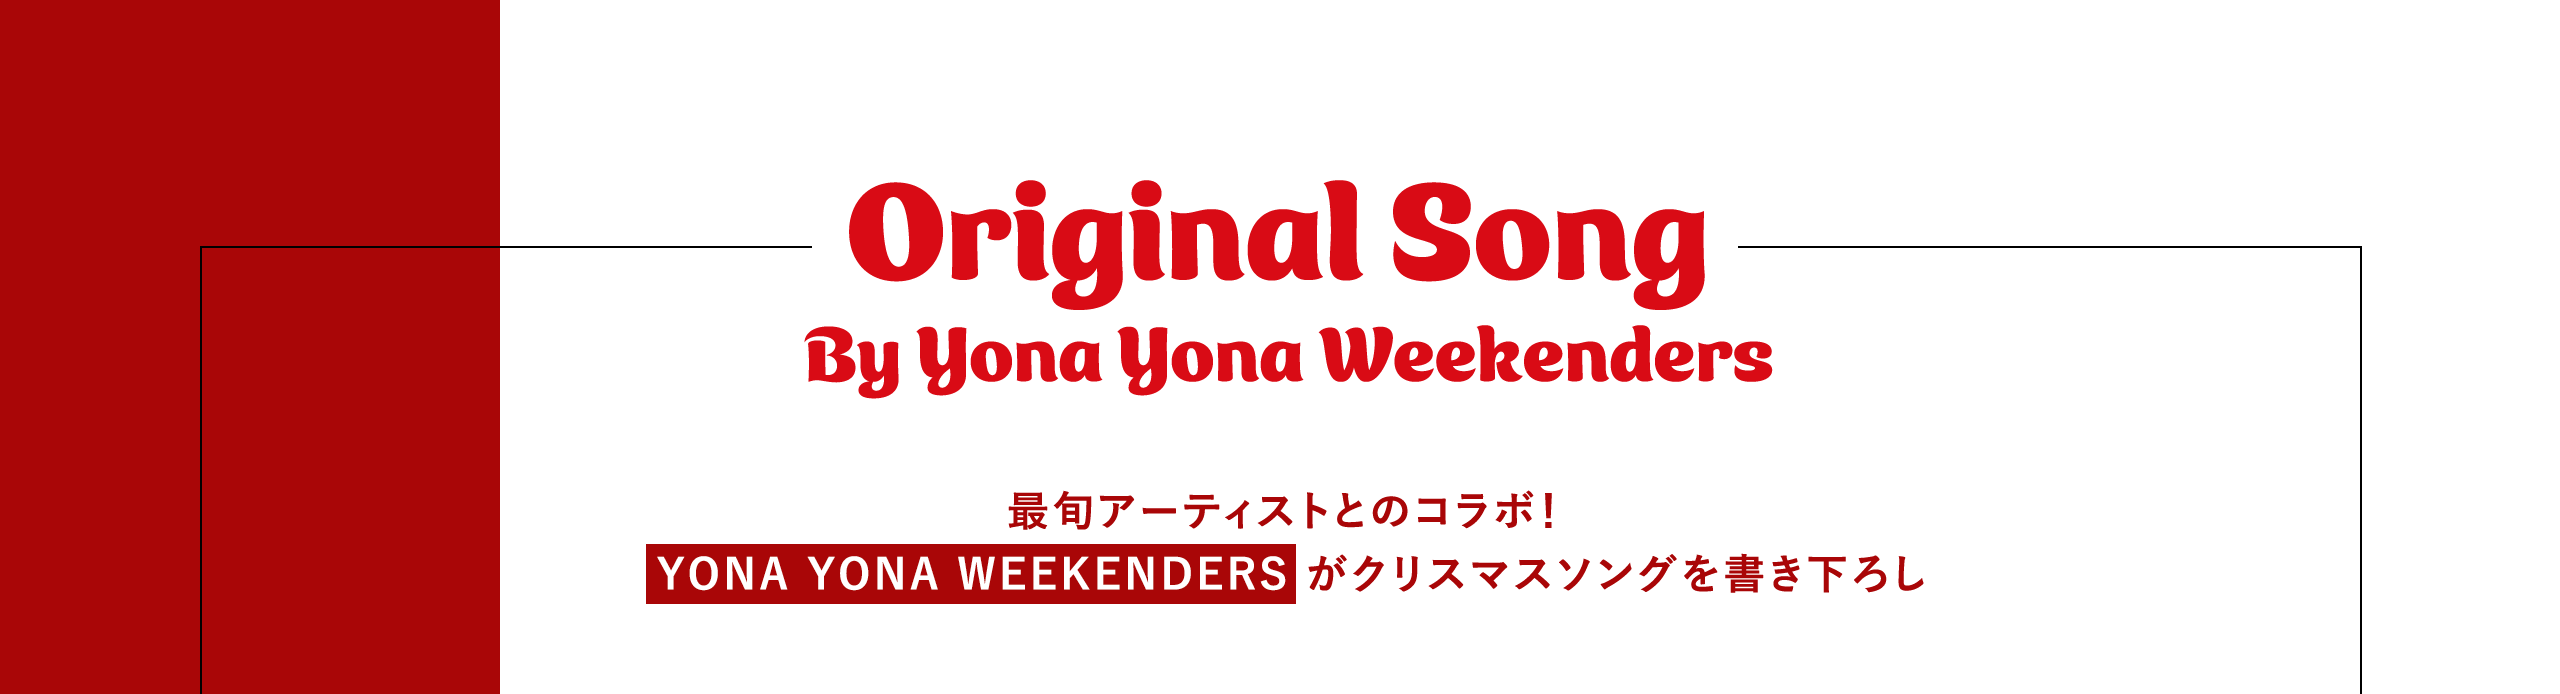 Original Song By Yona Yona Weekenders 最旬アーティストとのコラボ！YONA YONA WEEKENDERS がクリスマスソングを書き下ろし